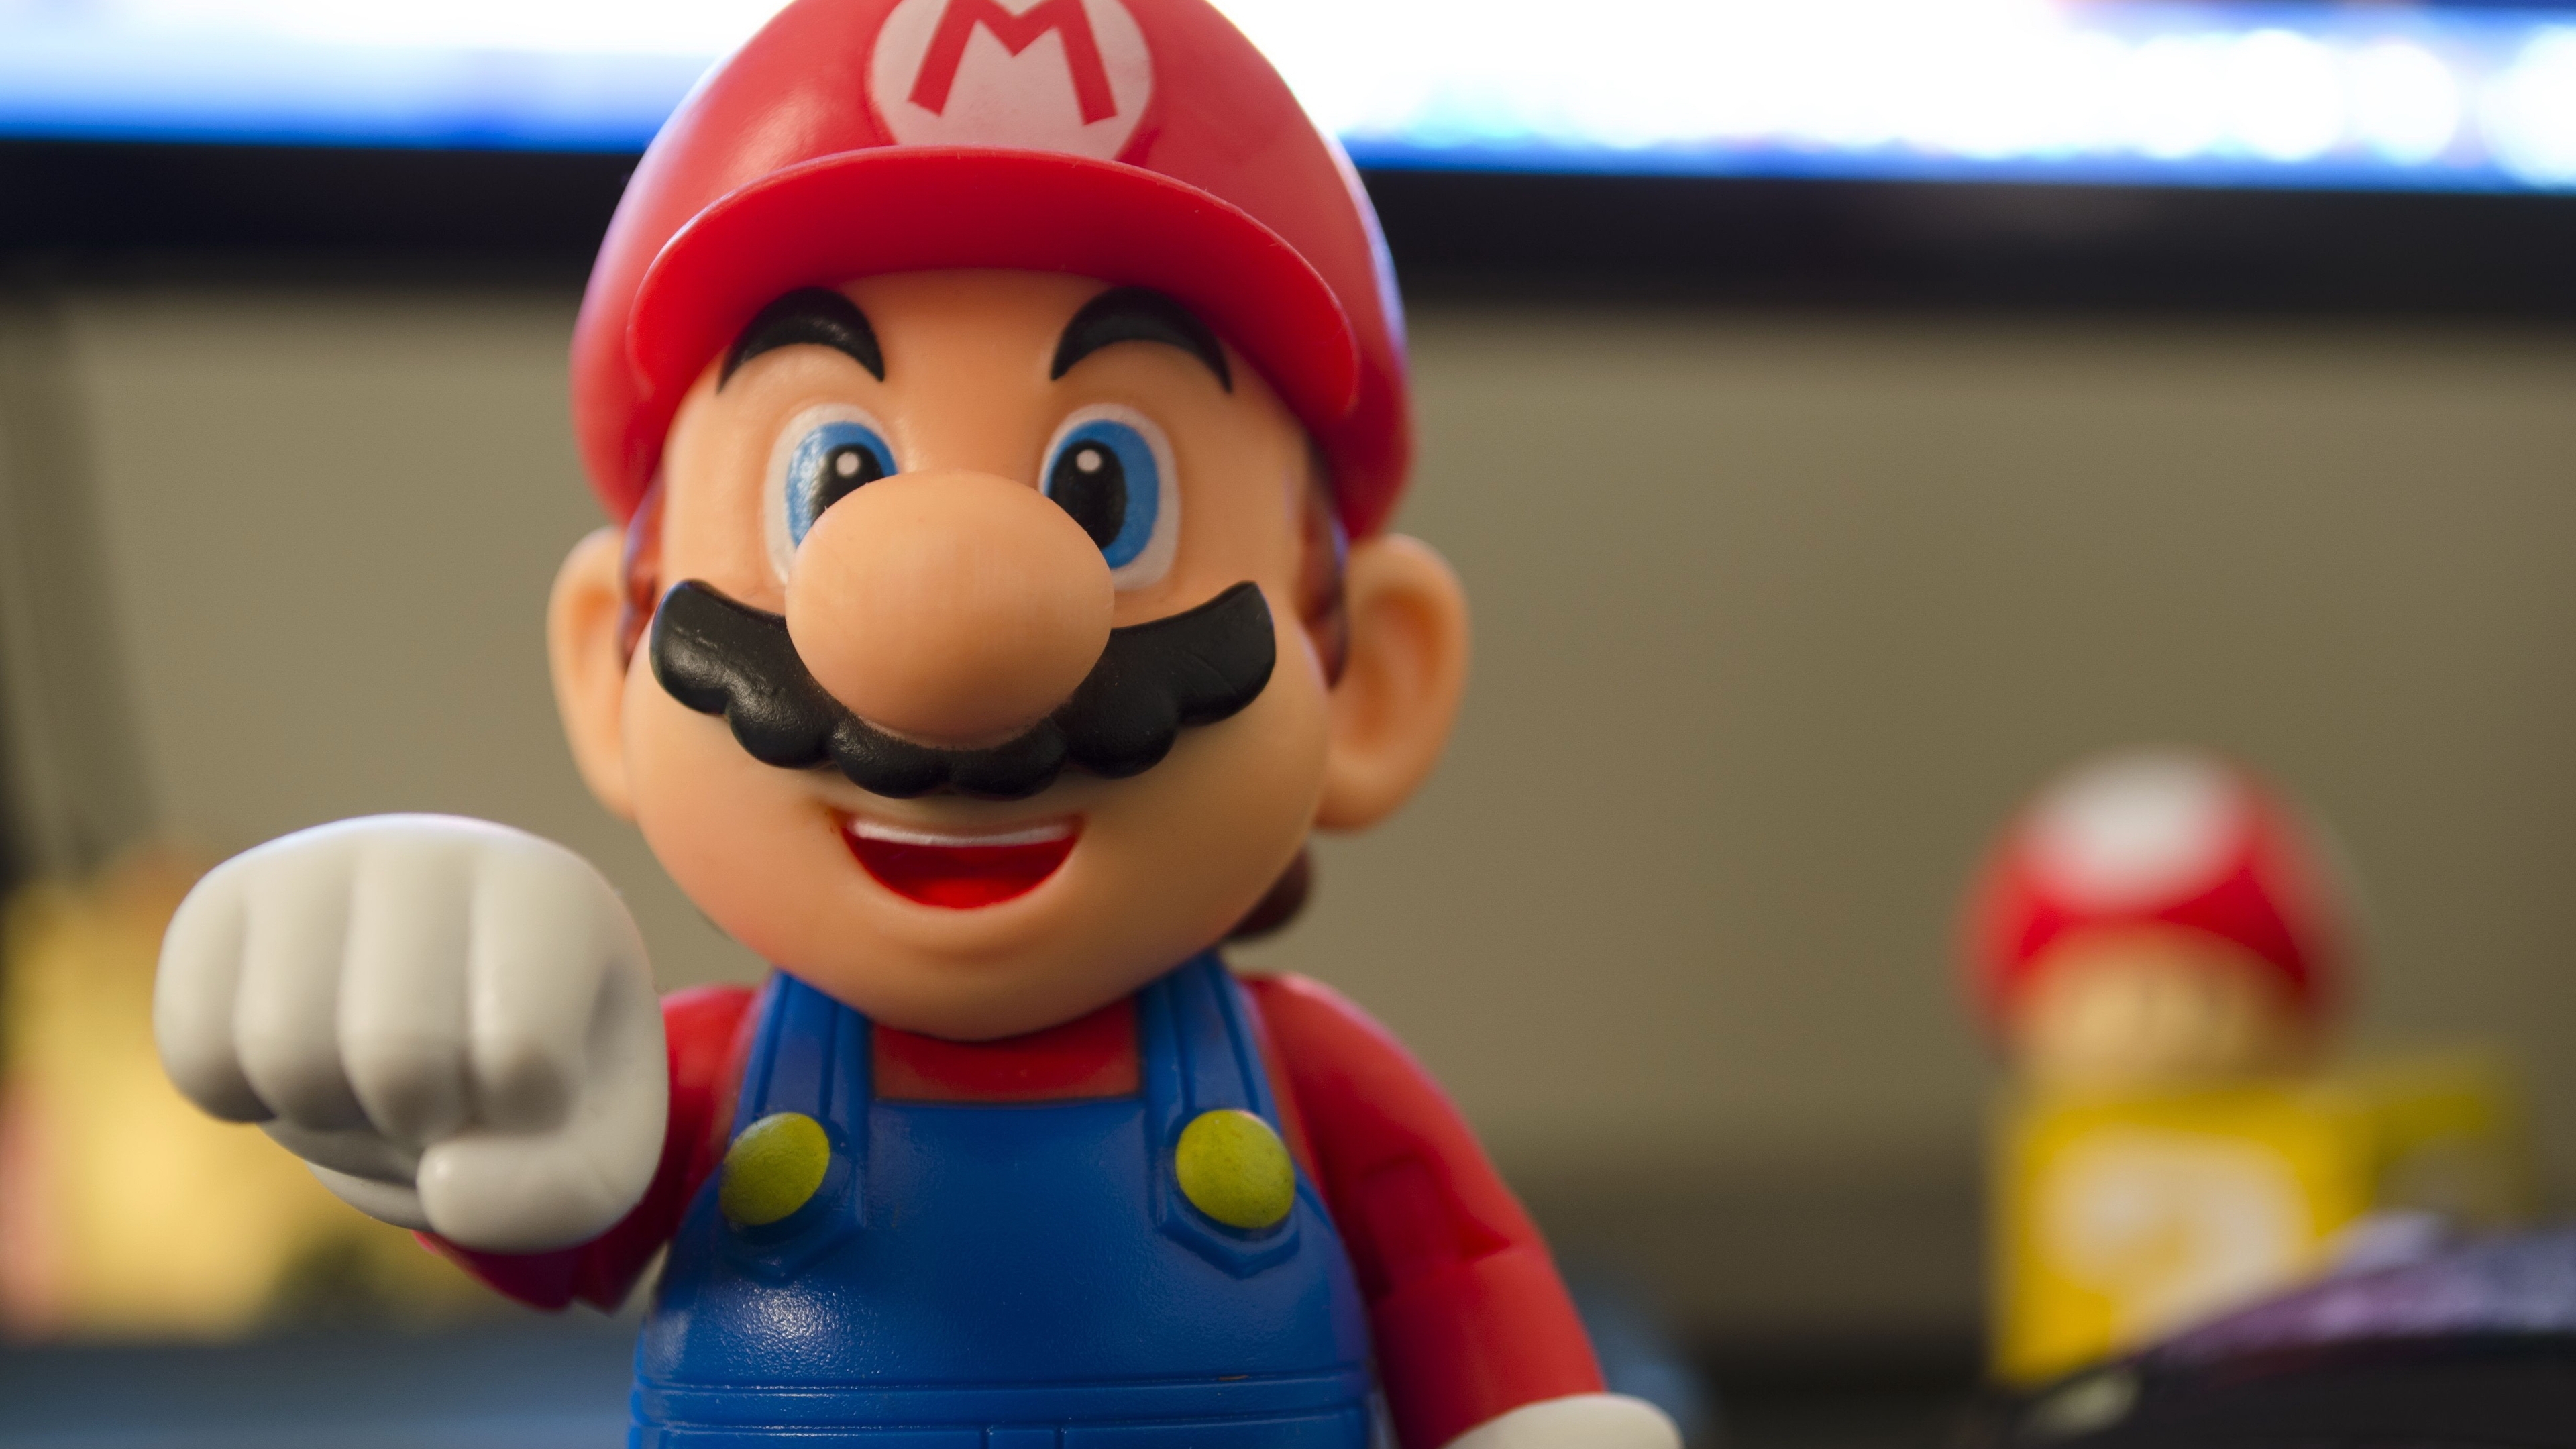 Super Mario Figurine for 3840 x 2160 Ultra HD resolution